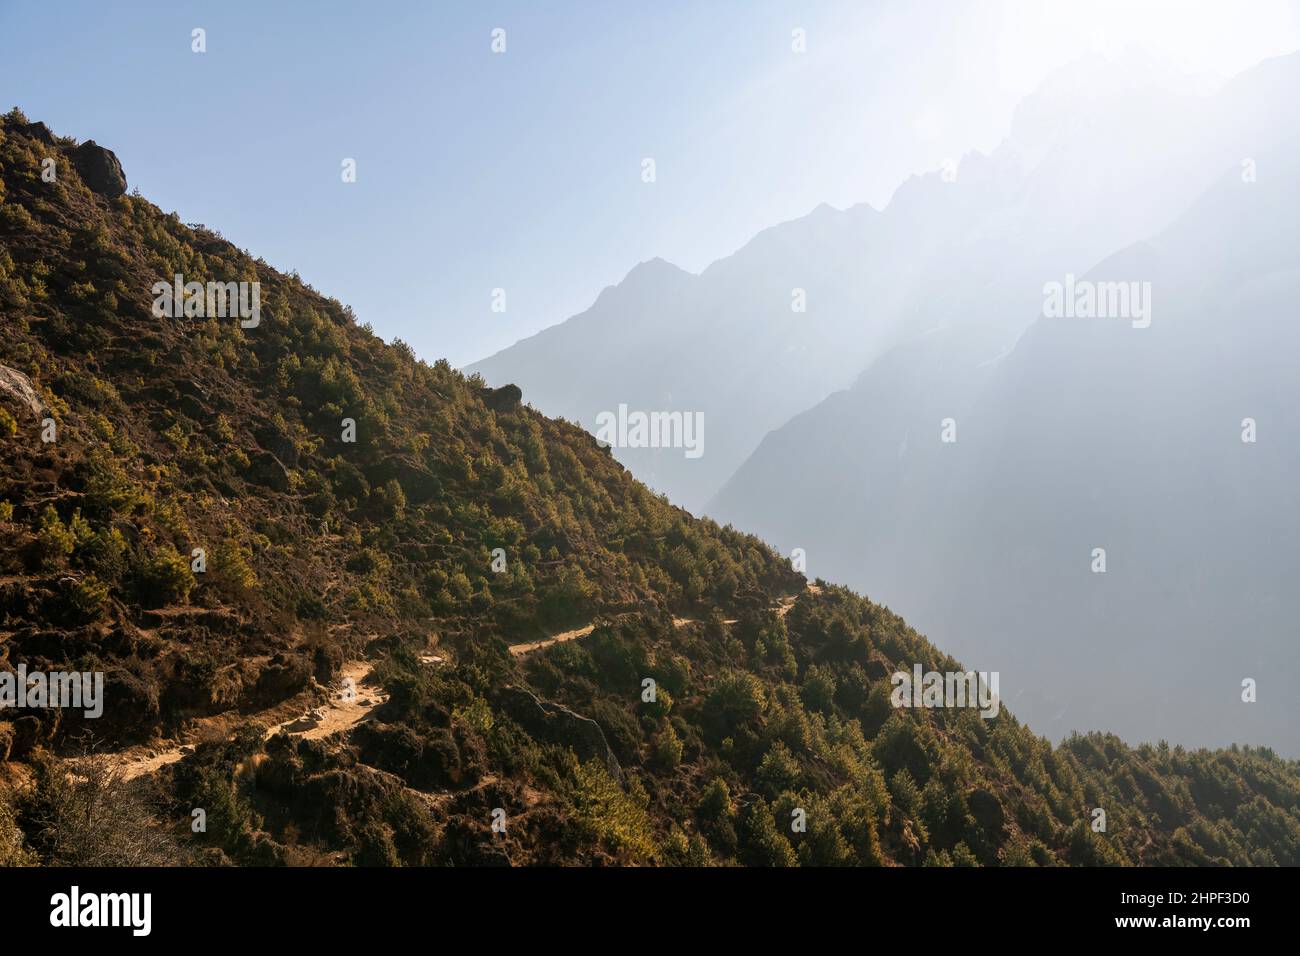 Naturaleza en Nepal, alta montaña con árboles en la sombra. Foto de stock